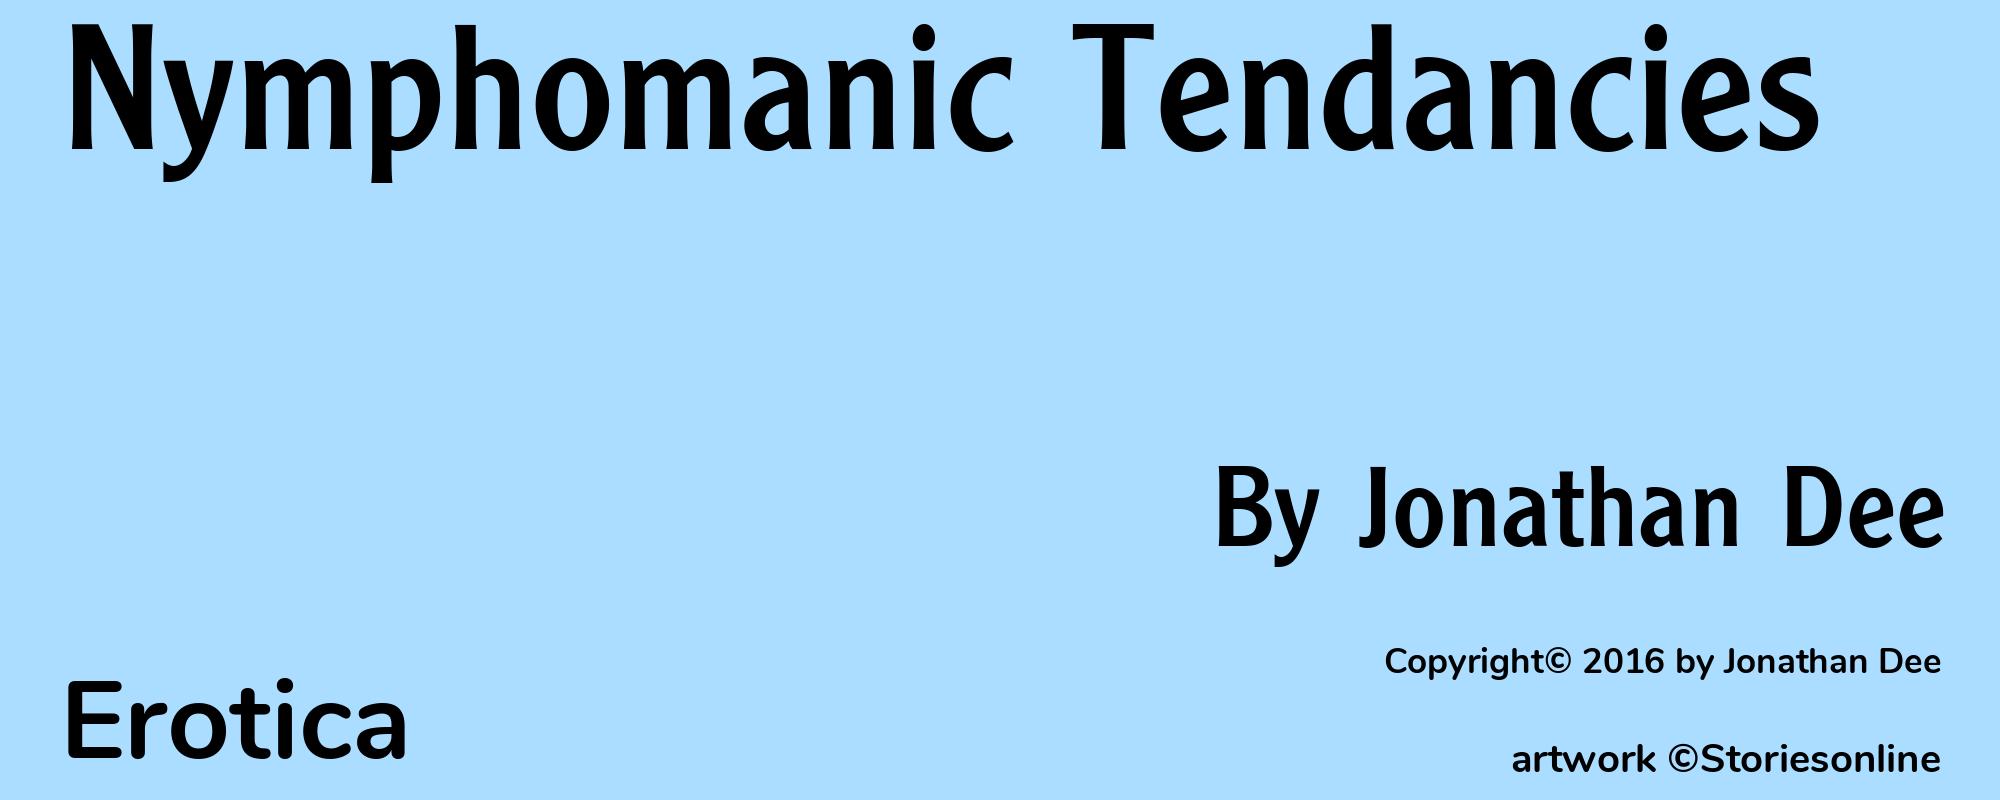 Nymphomanic Tendancies - Cover